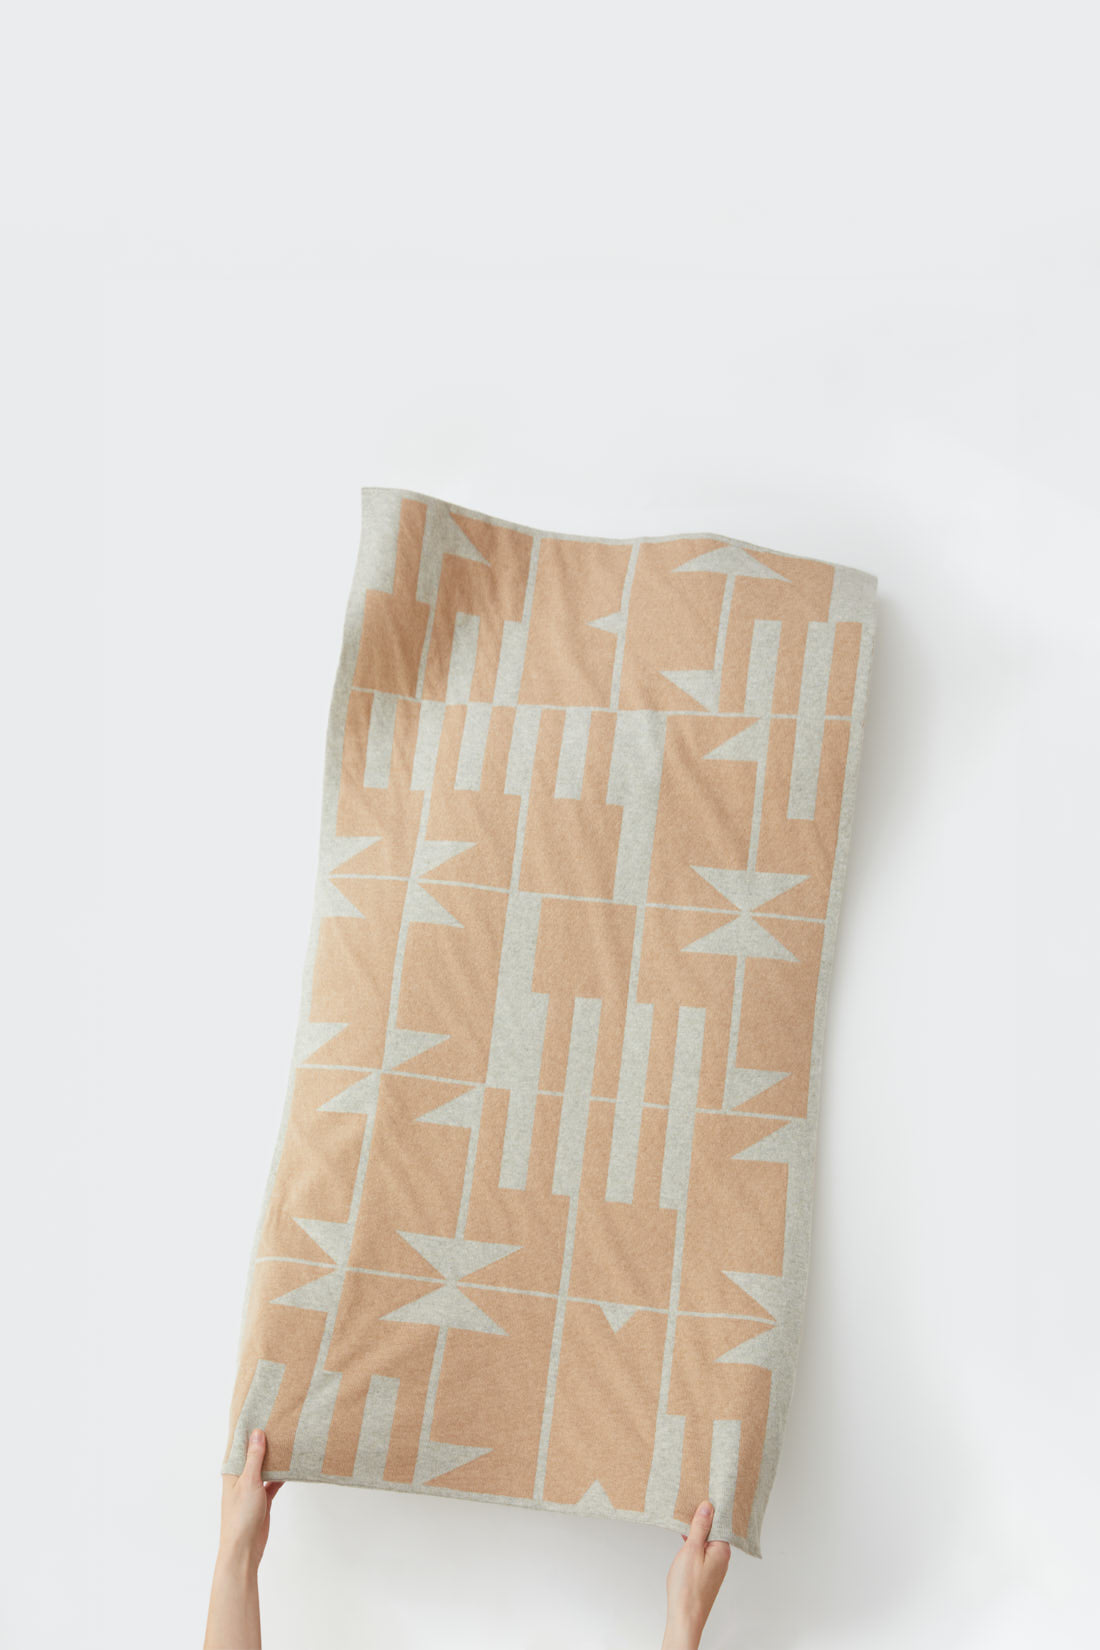 Mini Blanket "Keel" - Barley + Birch